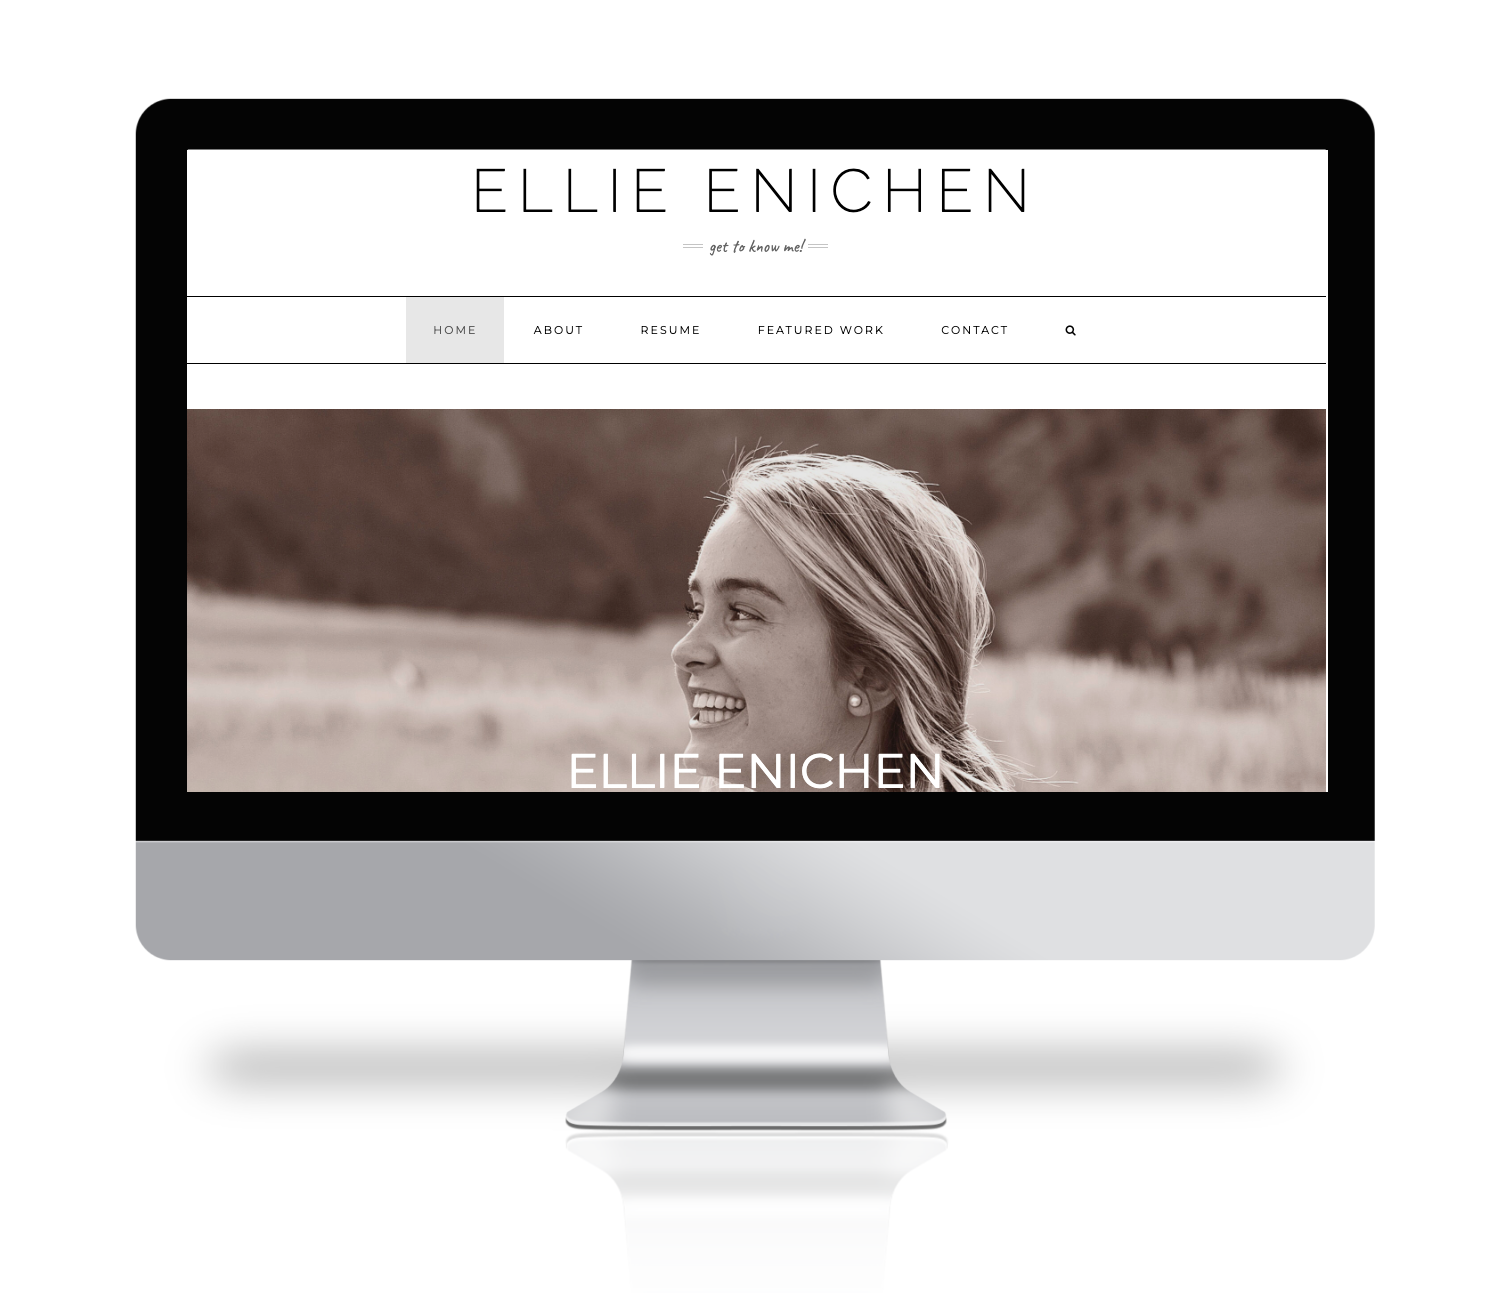 Picture of Ellie Enichen's portfolio site on sample computer